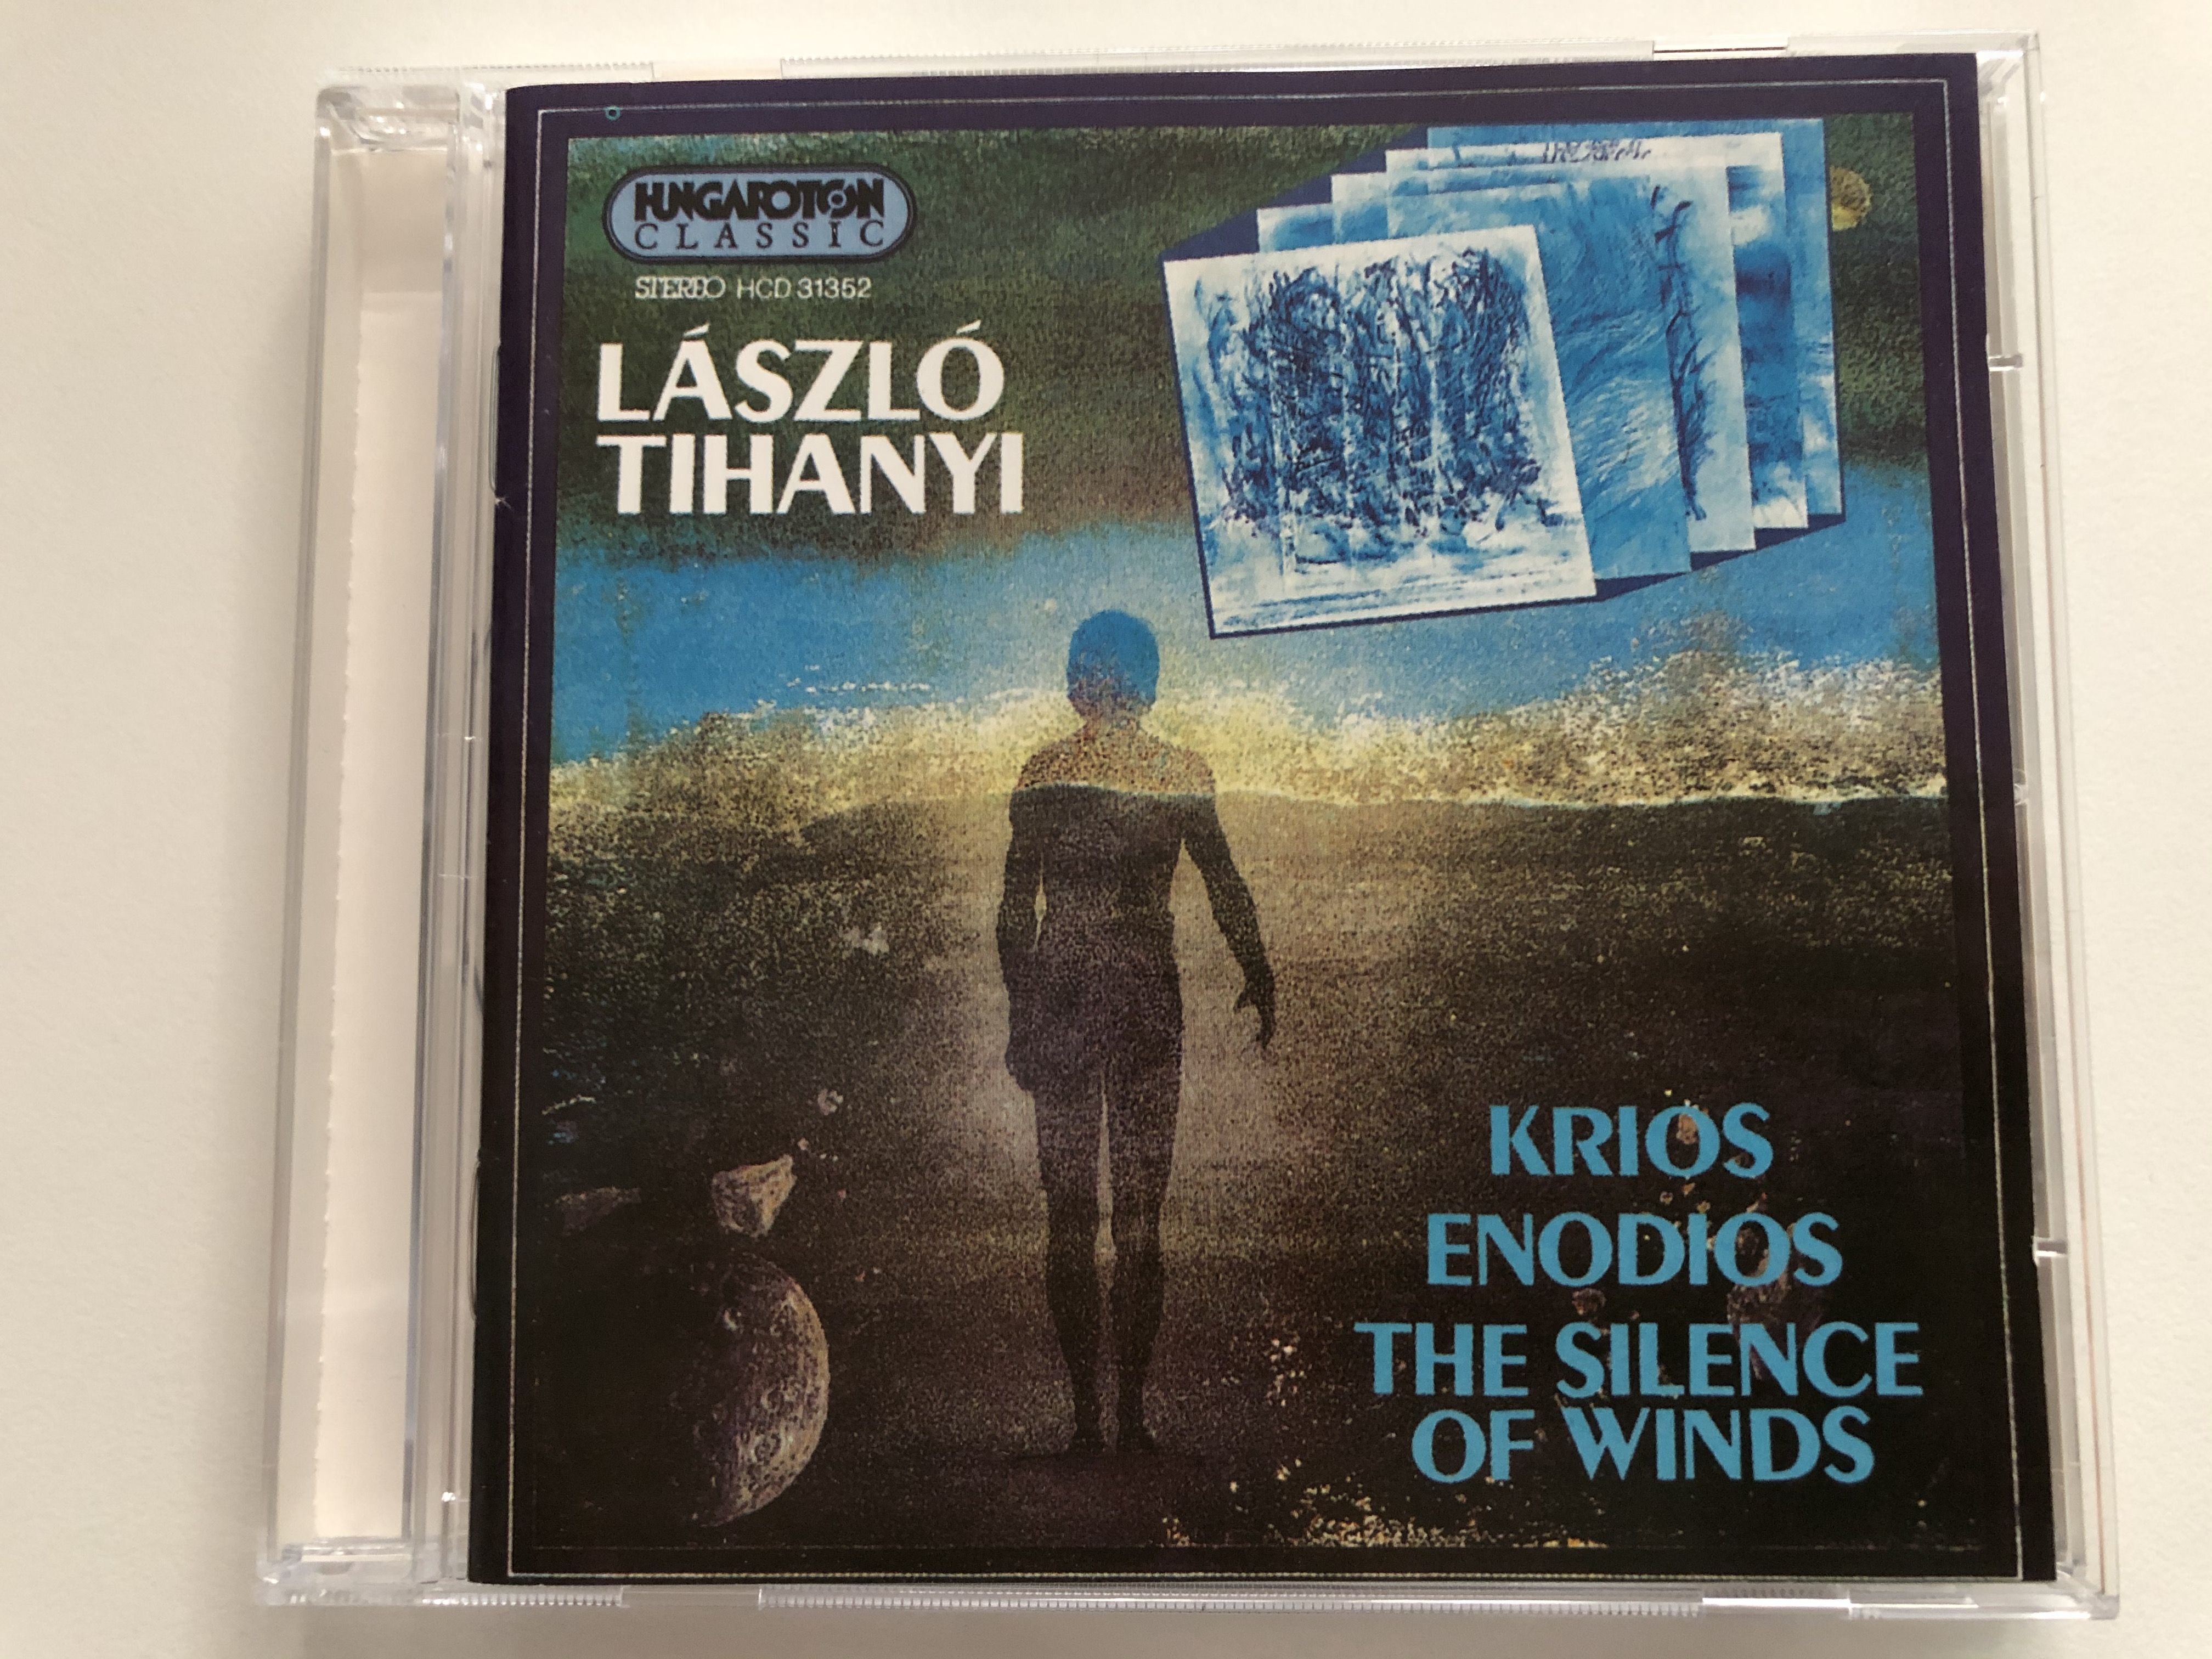 l-szl-tihanyi-krios-enodios-the-silence-of-winds-hungaroton-classic-audio-cd-1995-stereo-hcd-31352-1-.jpg